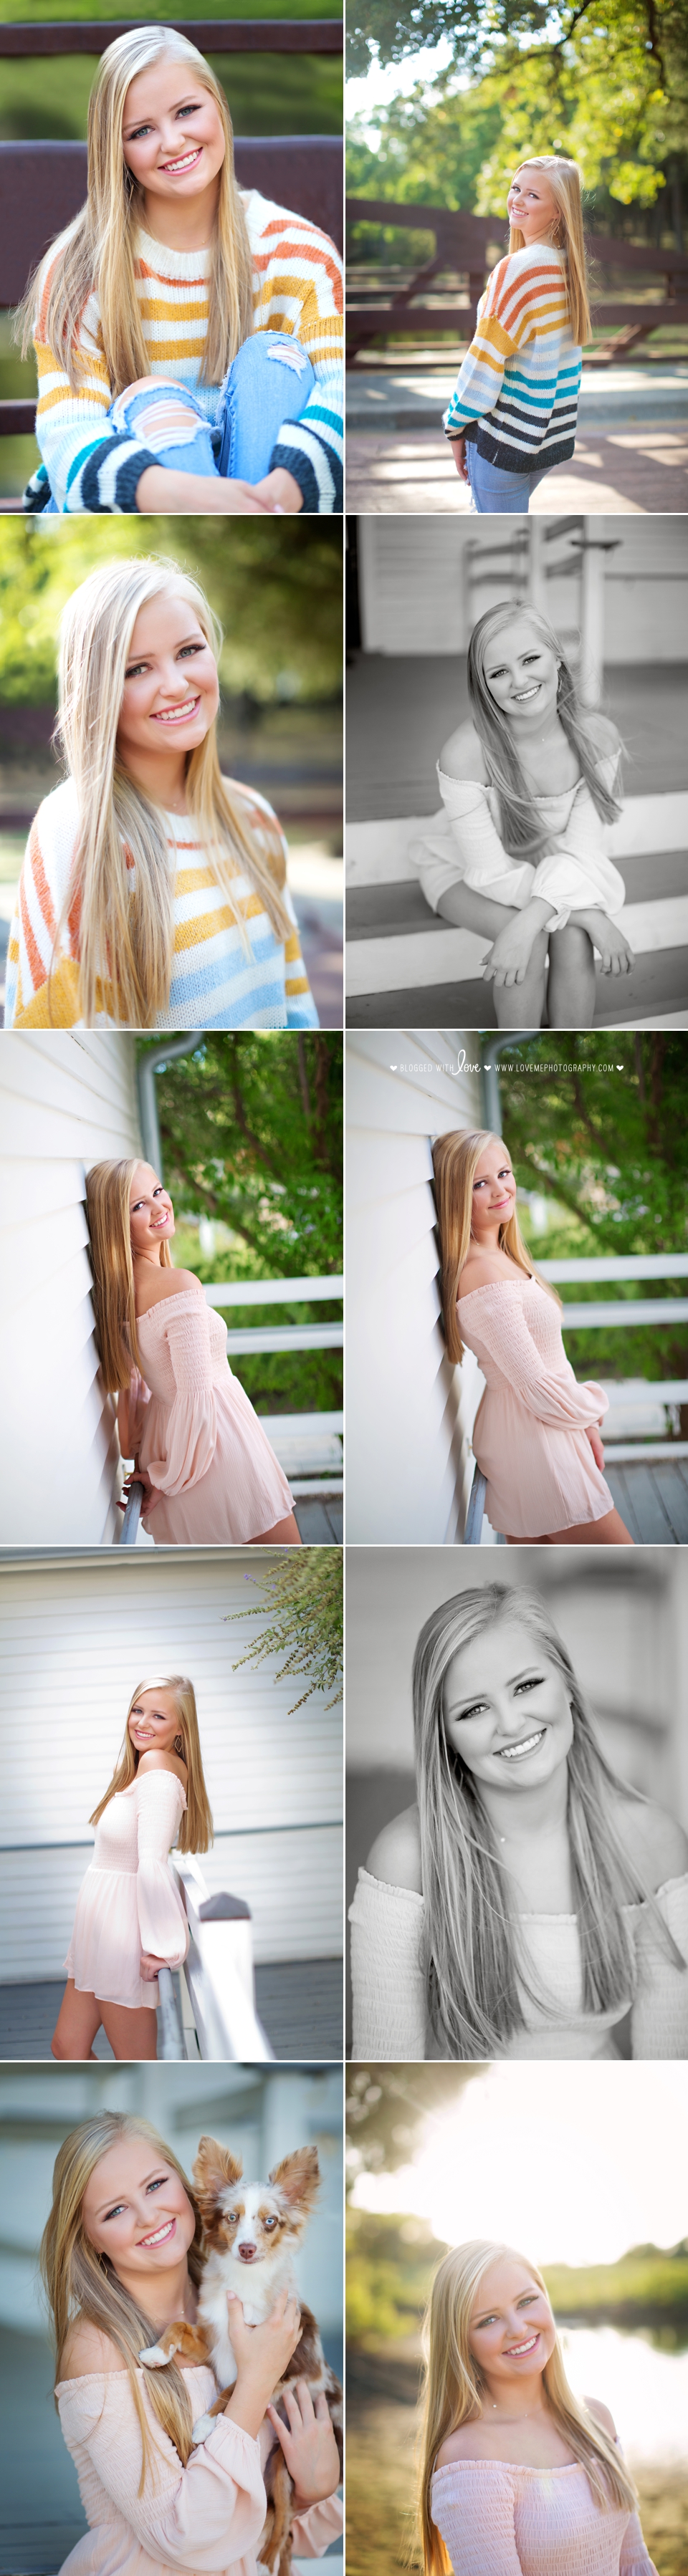 Senior portrait collage of girl